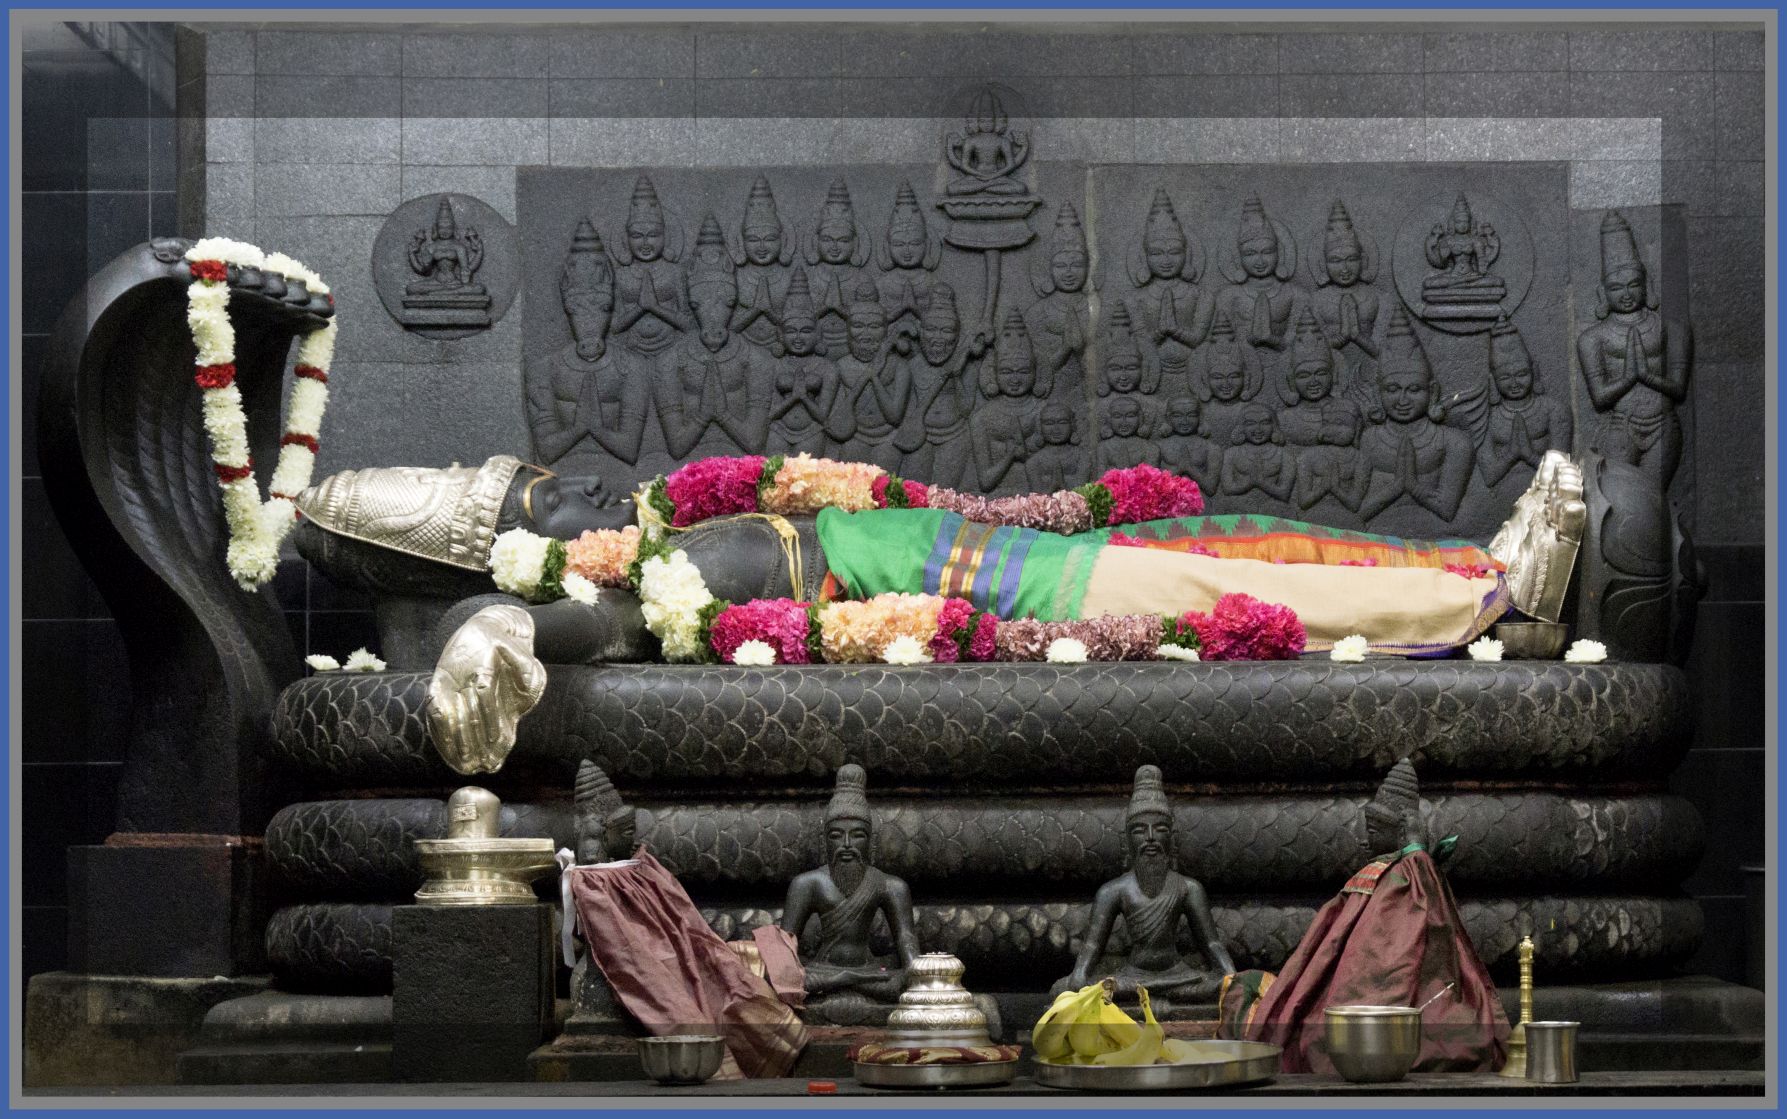 Sri Anantapadmanabha